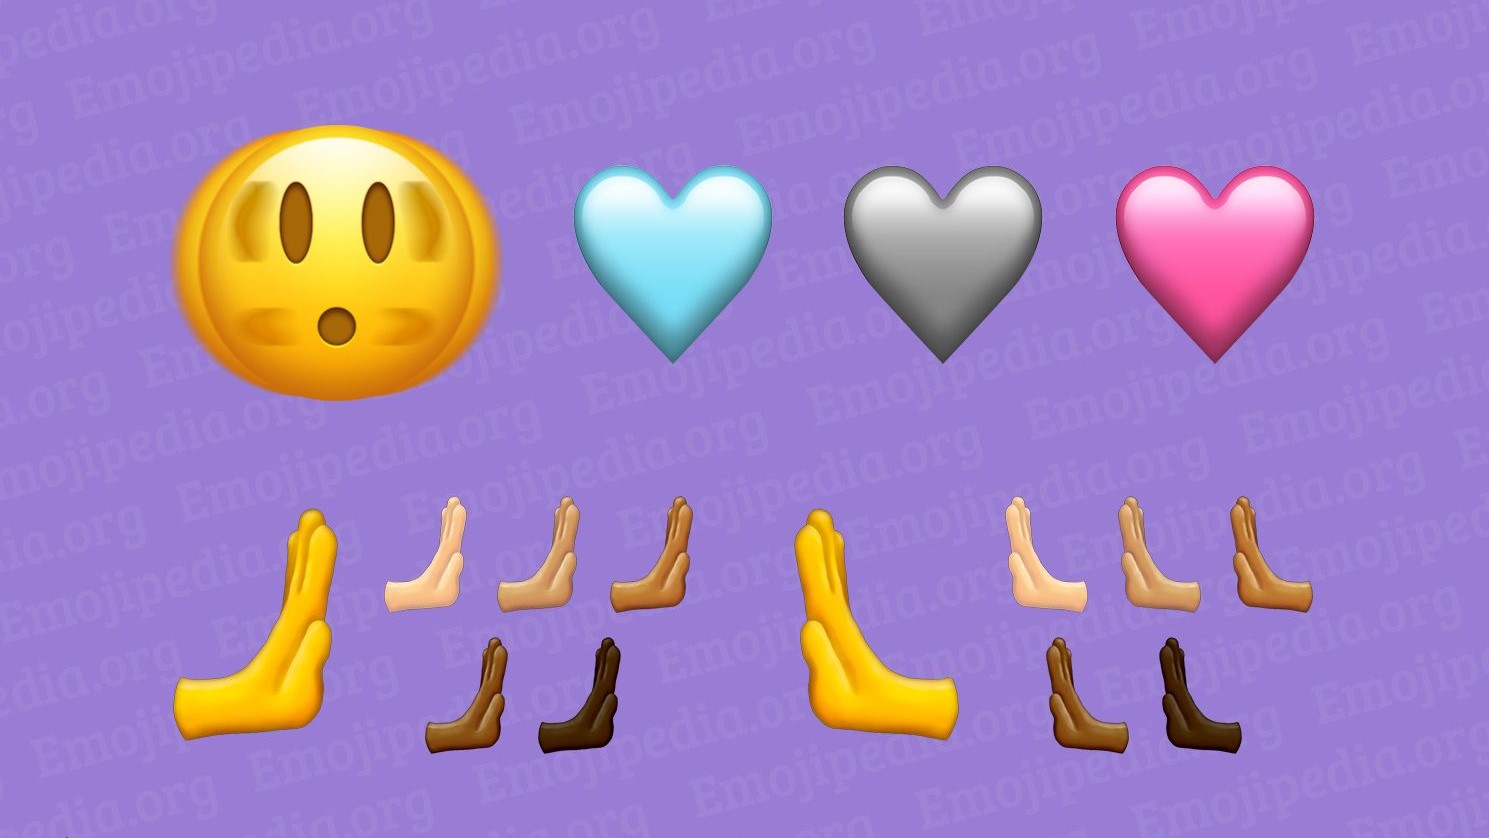 Samsung Emoji List — Emojis for Samsung Galaxy and Galaxy Note [Updated  2022]